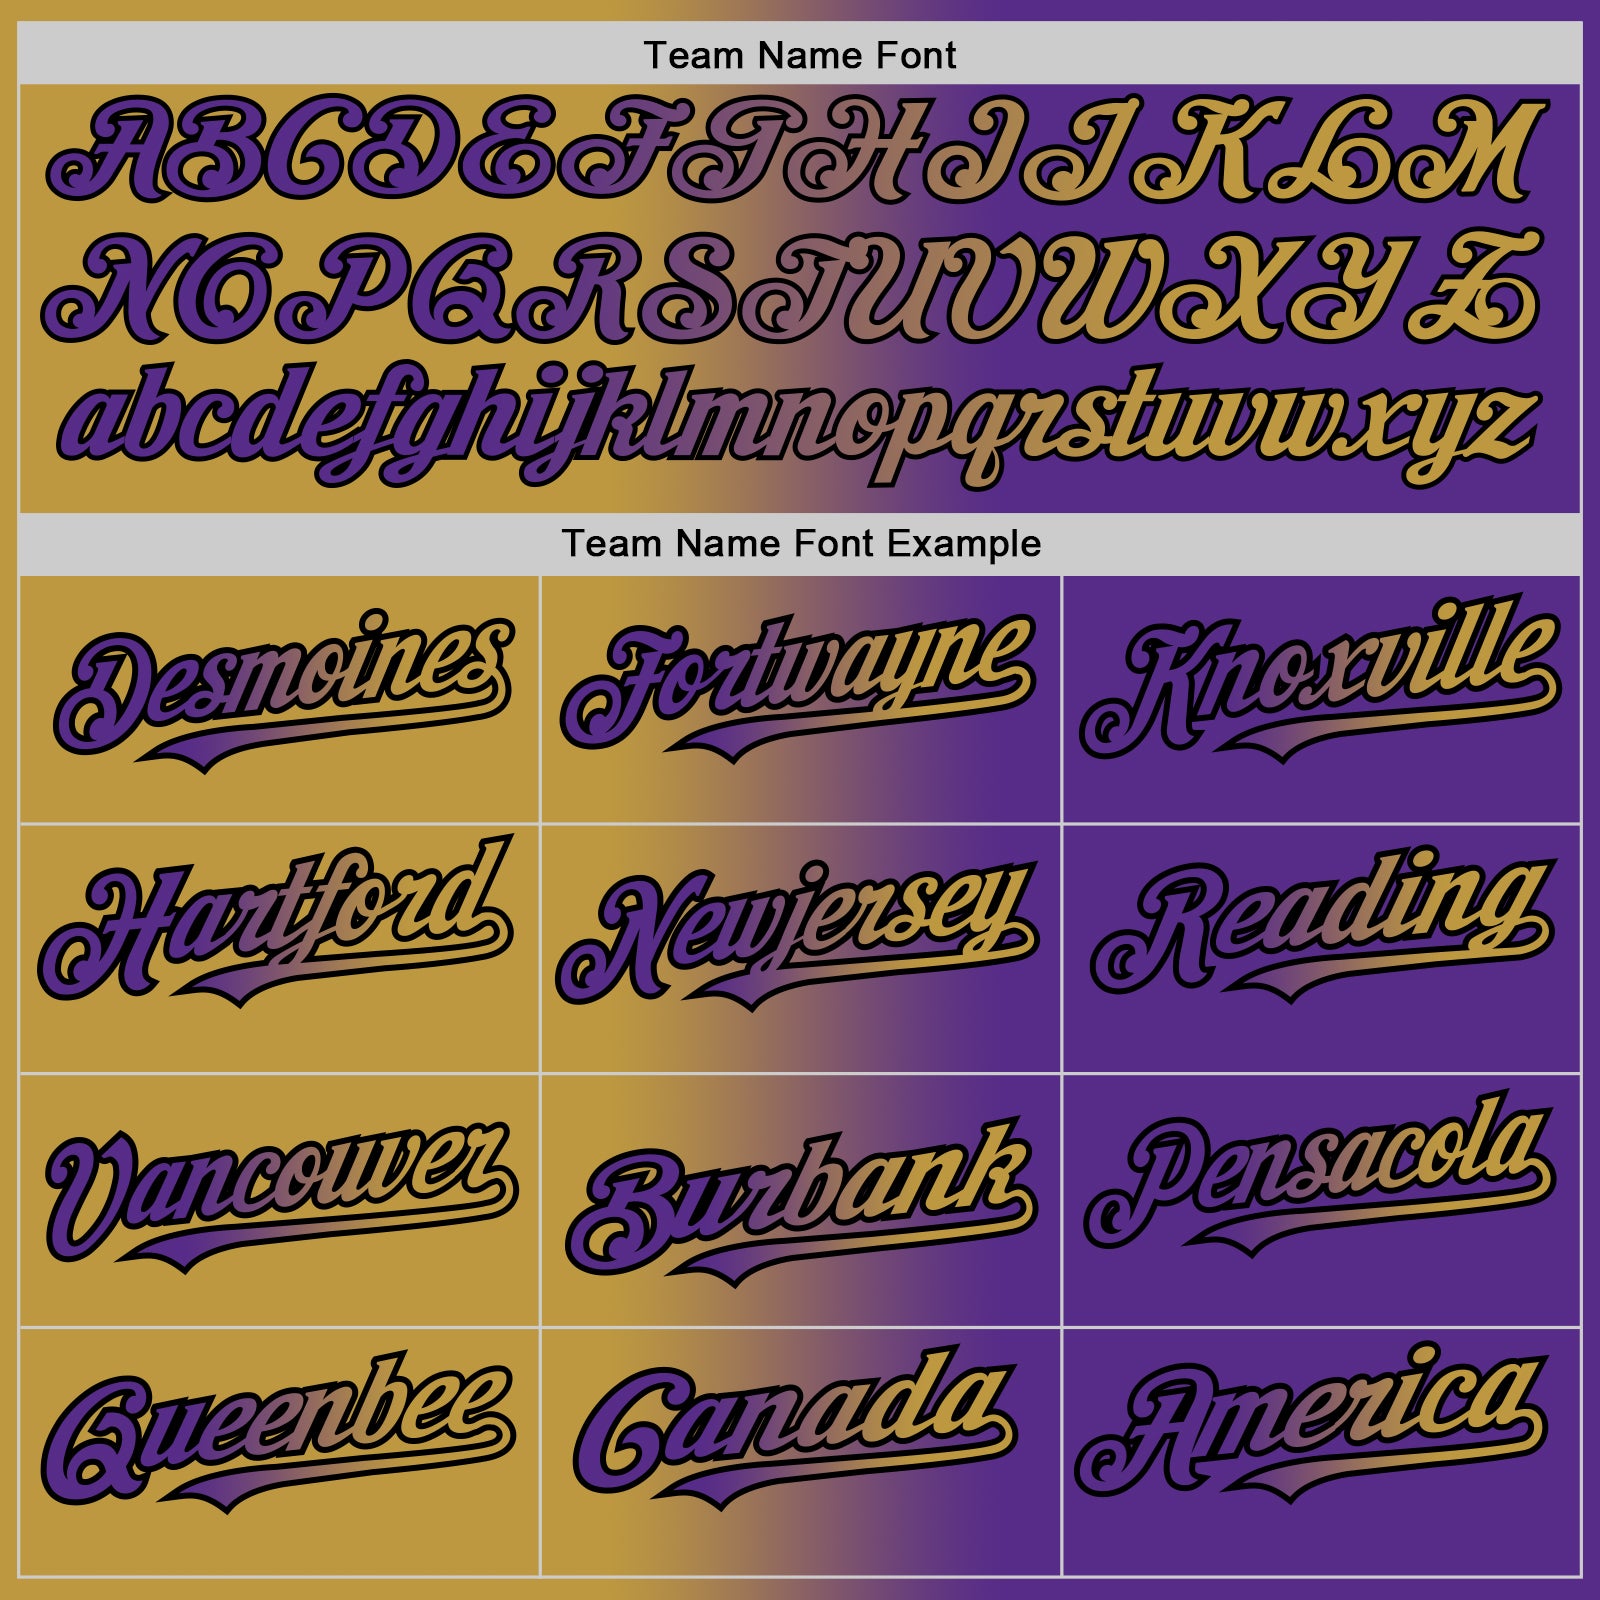 Custom Black Purple-Gold Authentic Baseball Jersey Discount